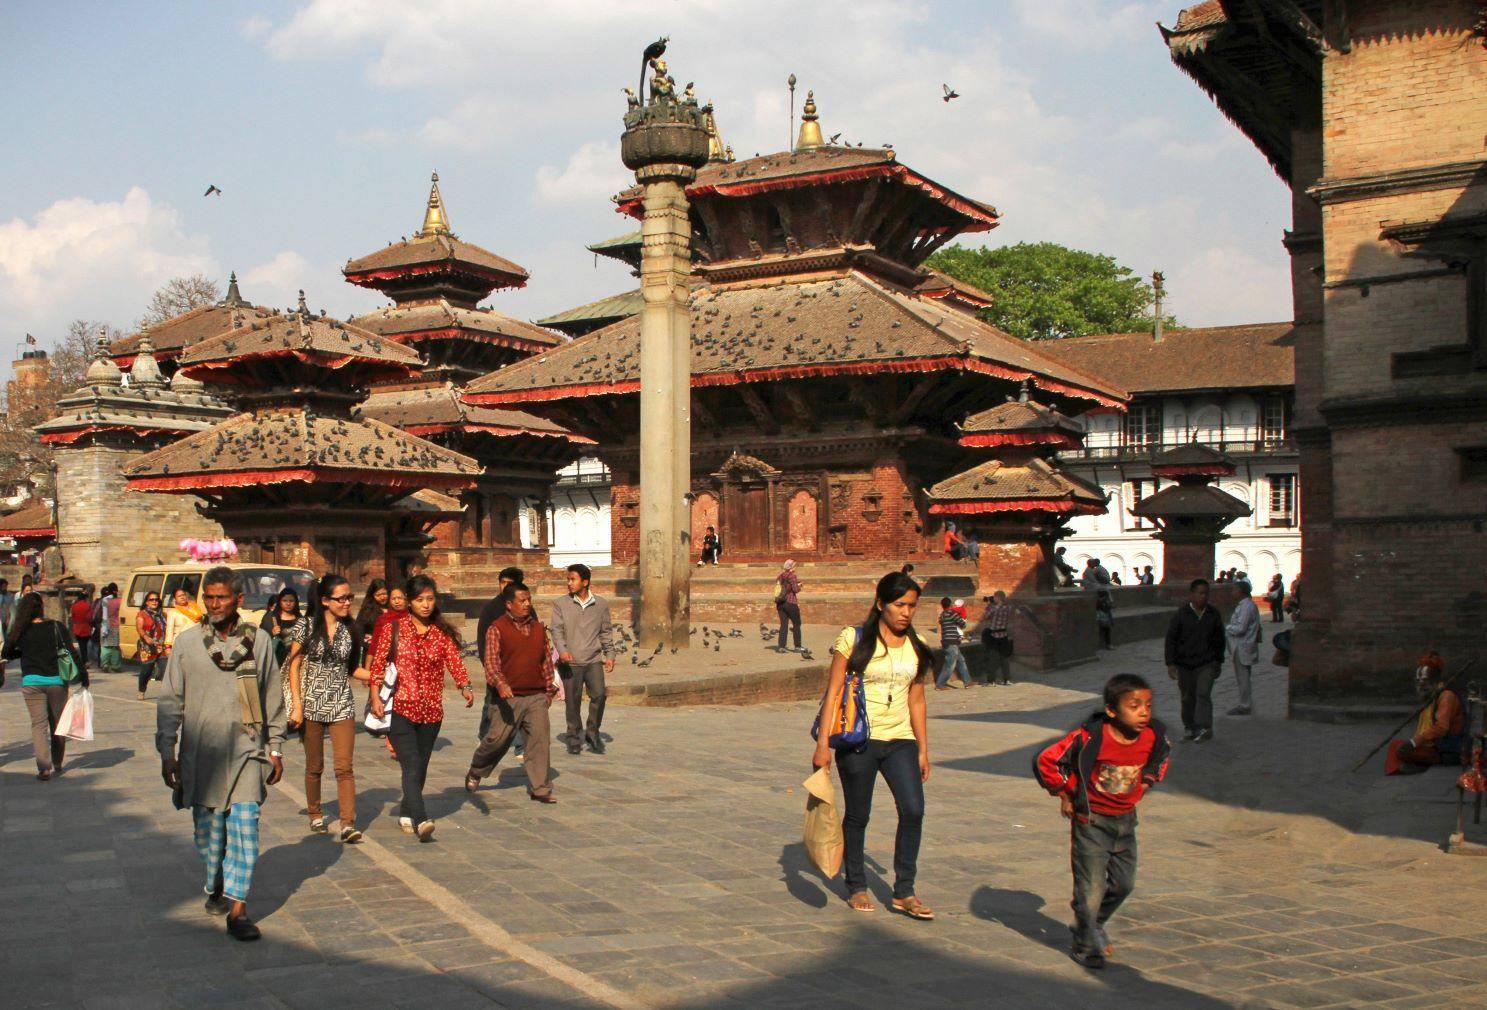 ¡Namaste! Bienvenidos a Nepal